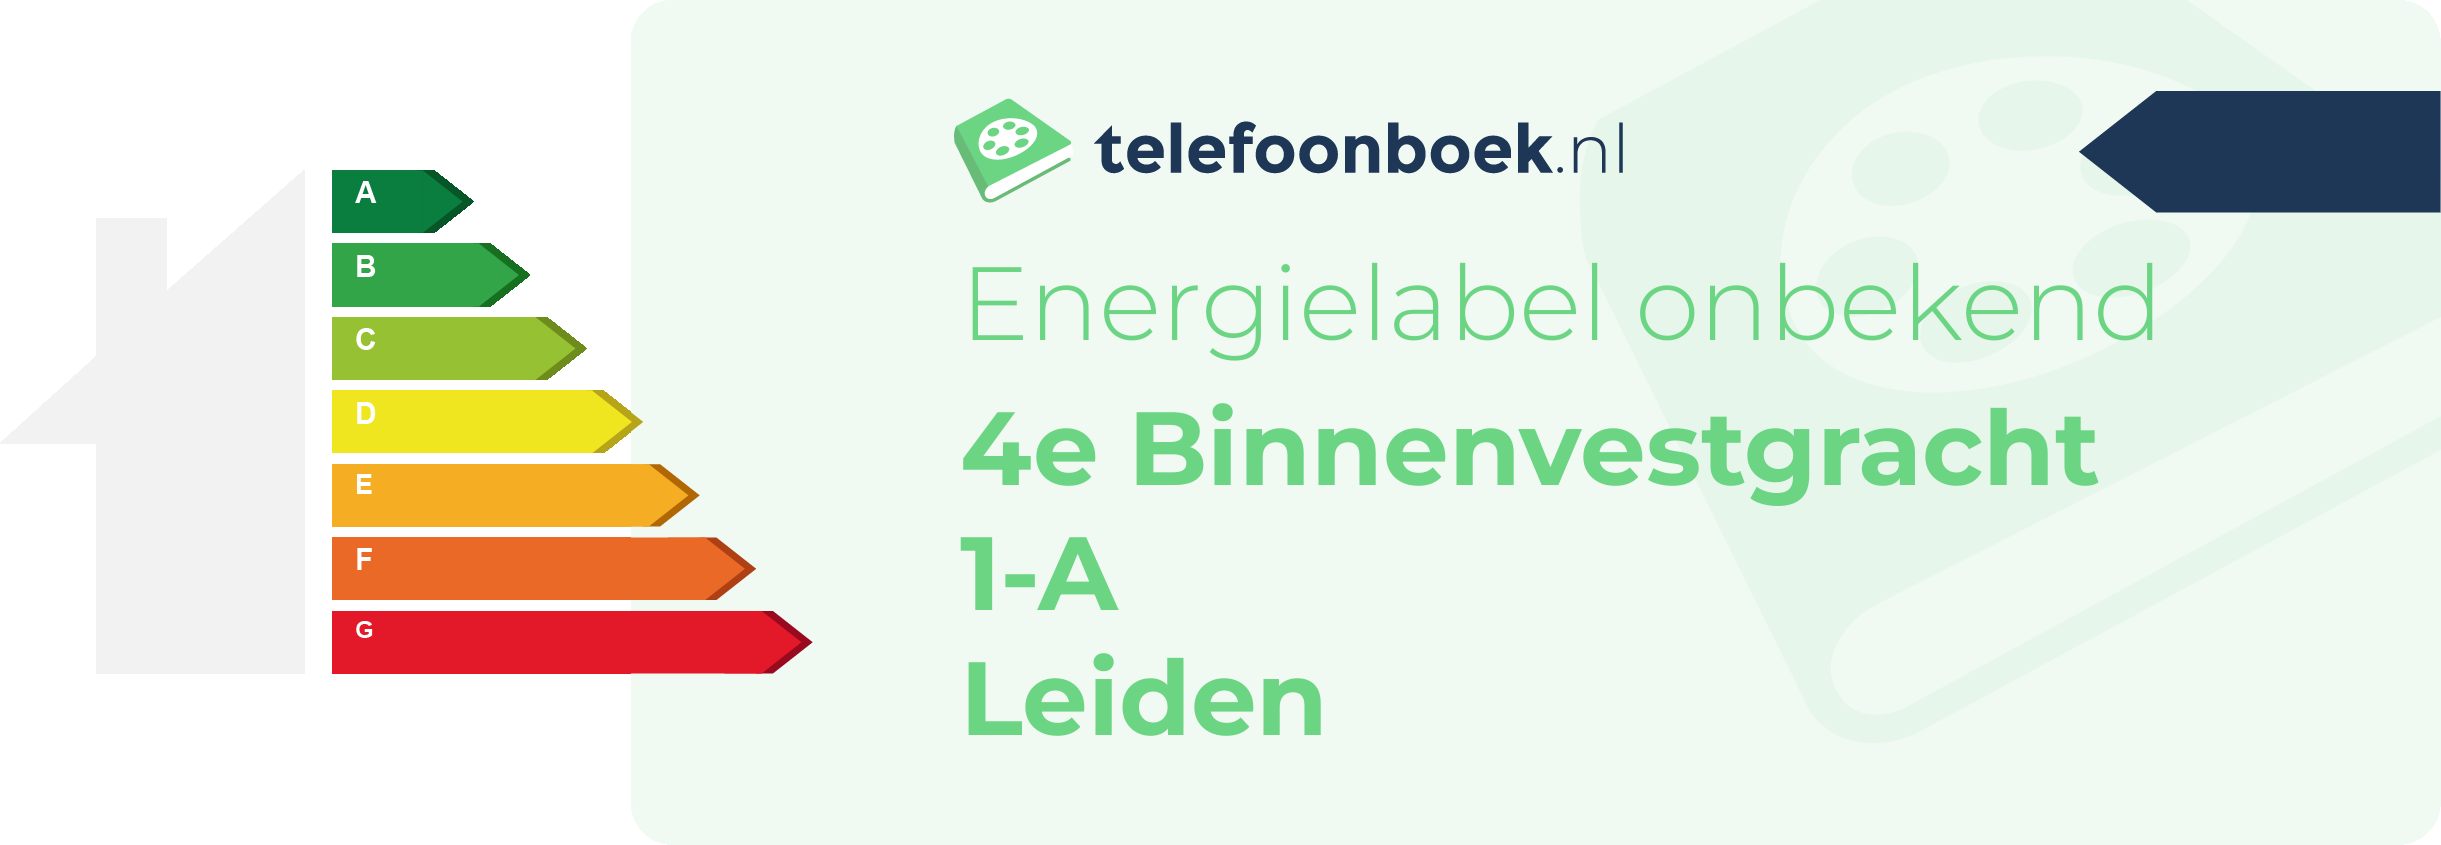 Energielabel 4e Binnenvestgracht 1-A Leiden